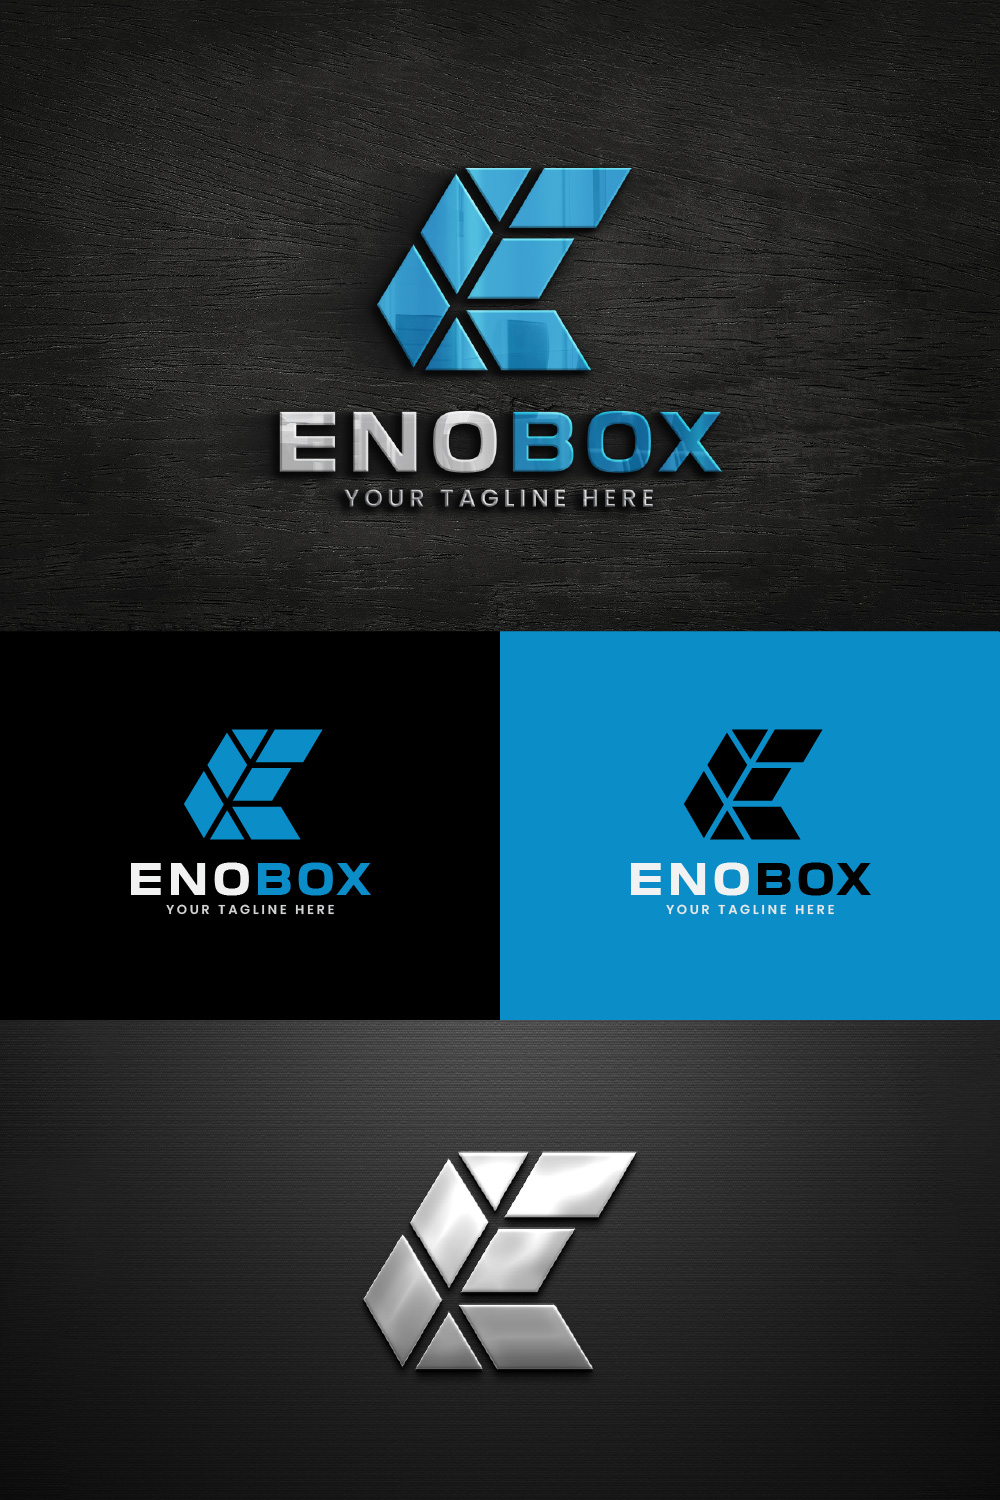 box logo design